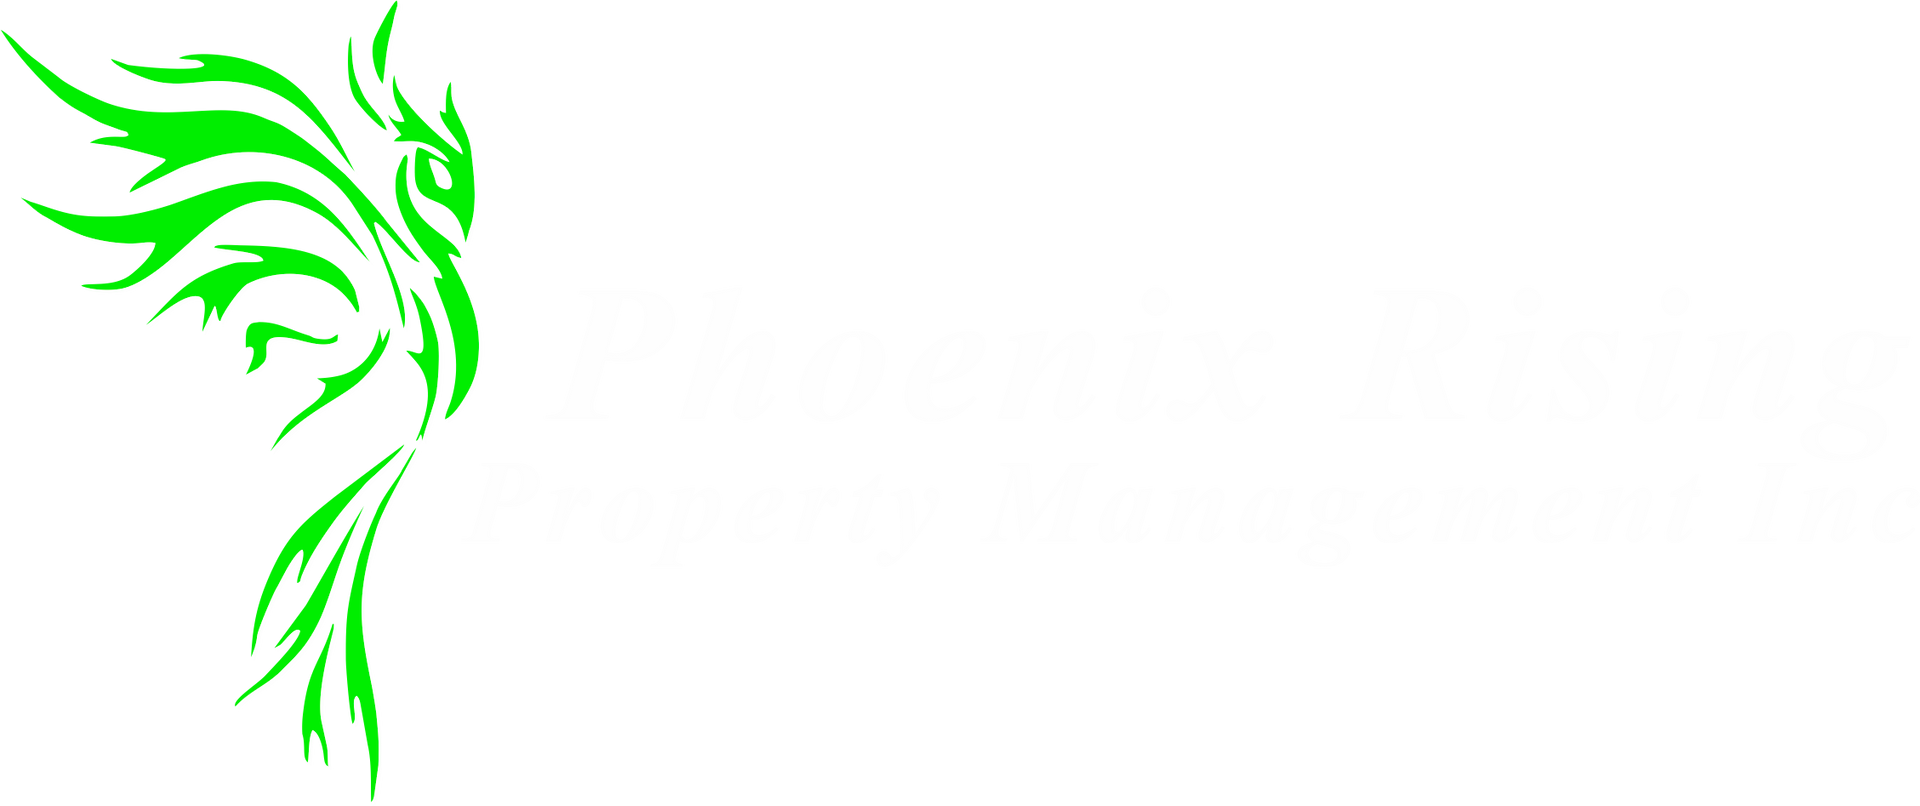 Phoenix Rising Property Management Inc Logo